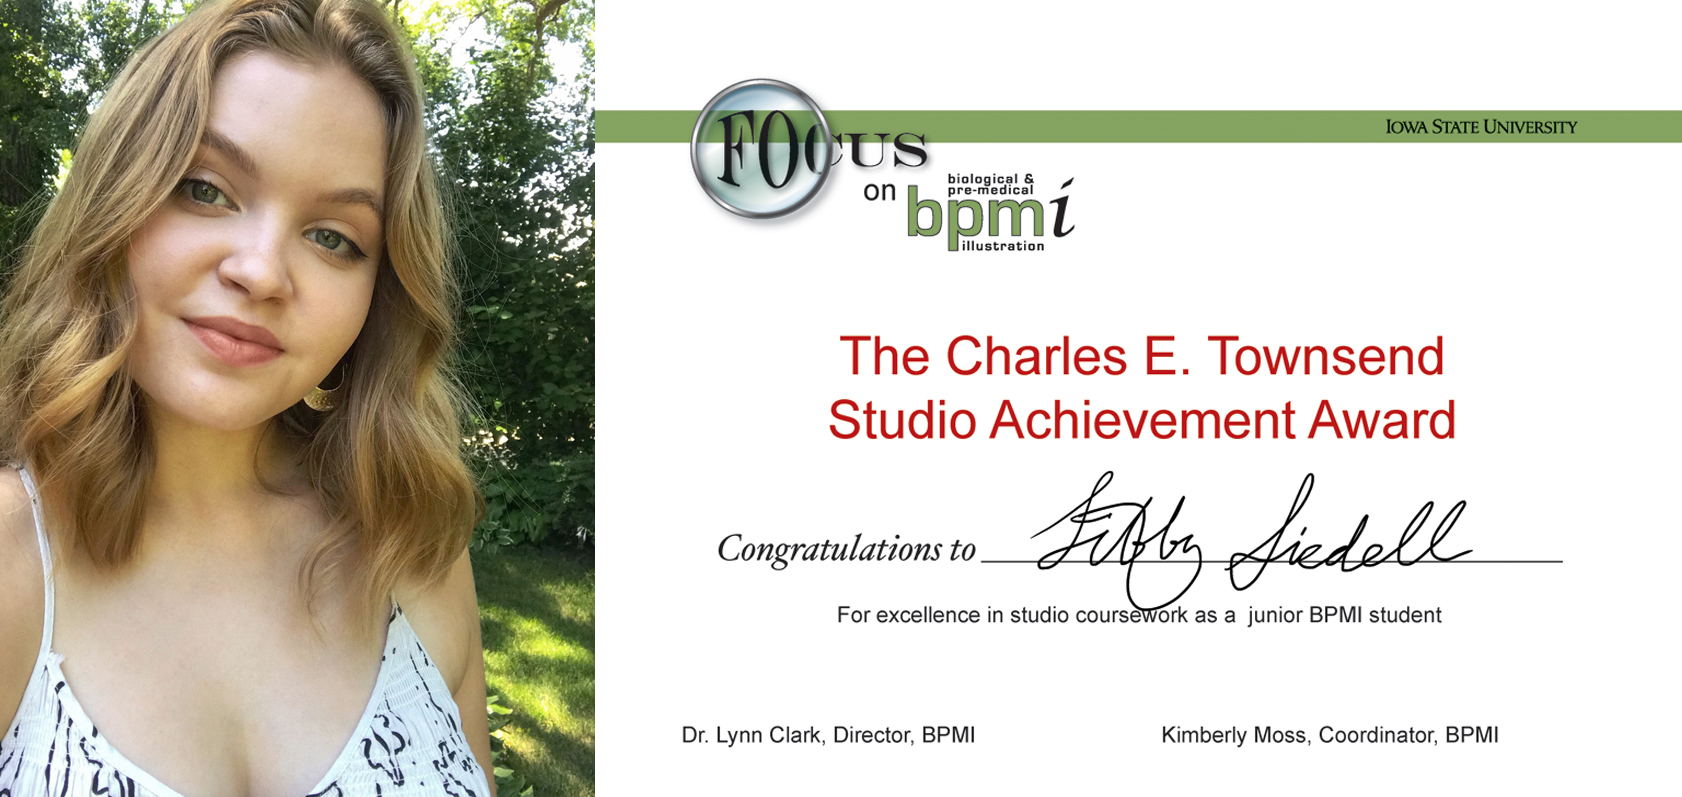 Charles E Townsend Studio Achievement Award - Libby Siedell